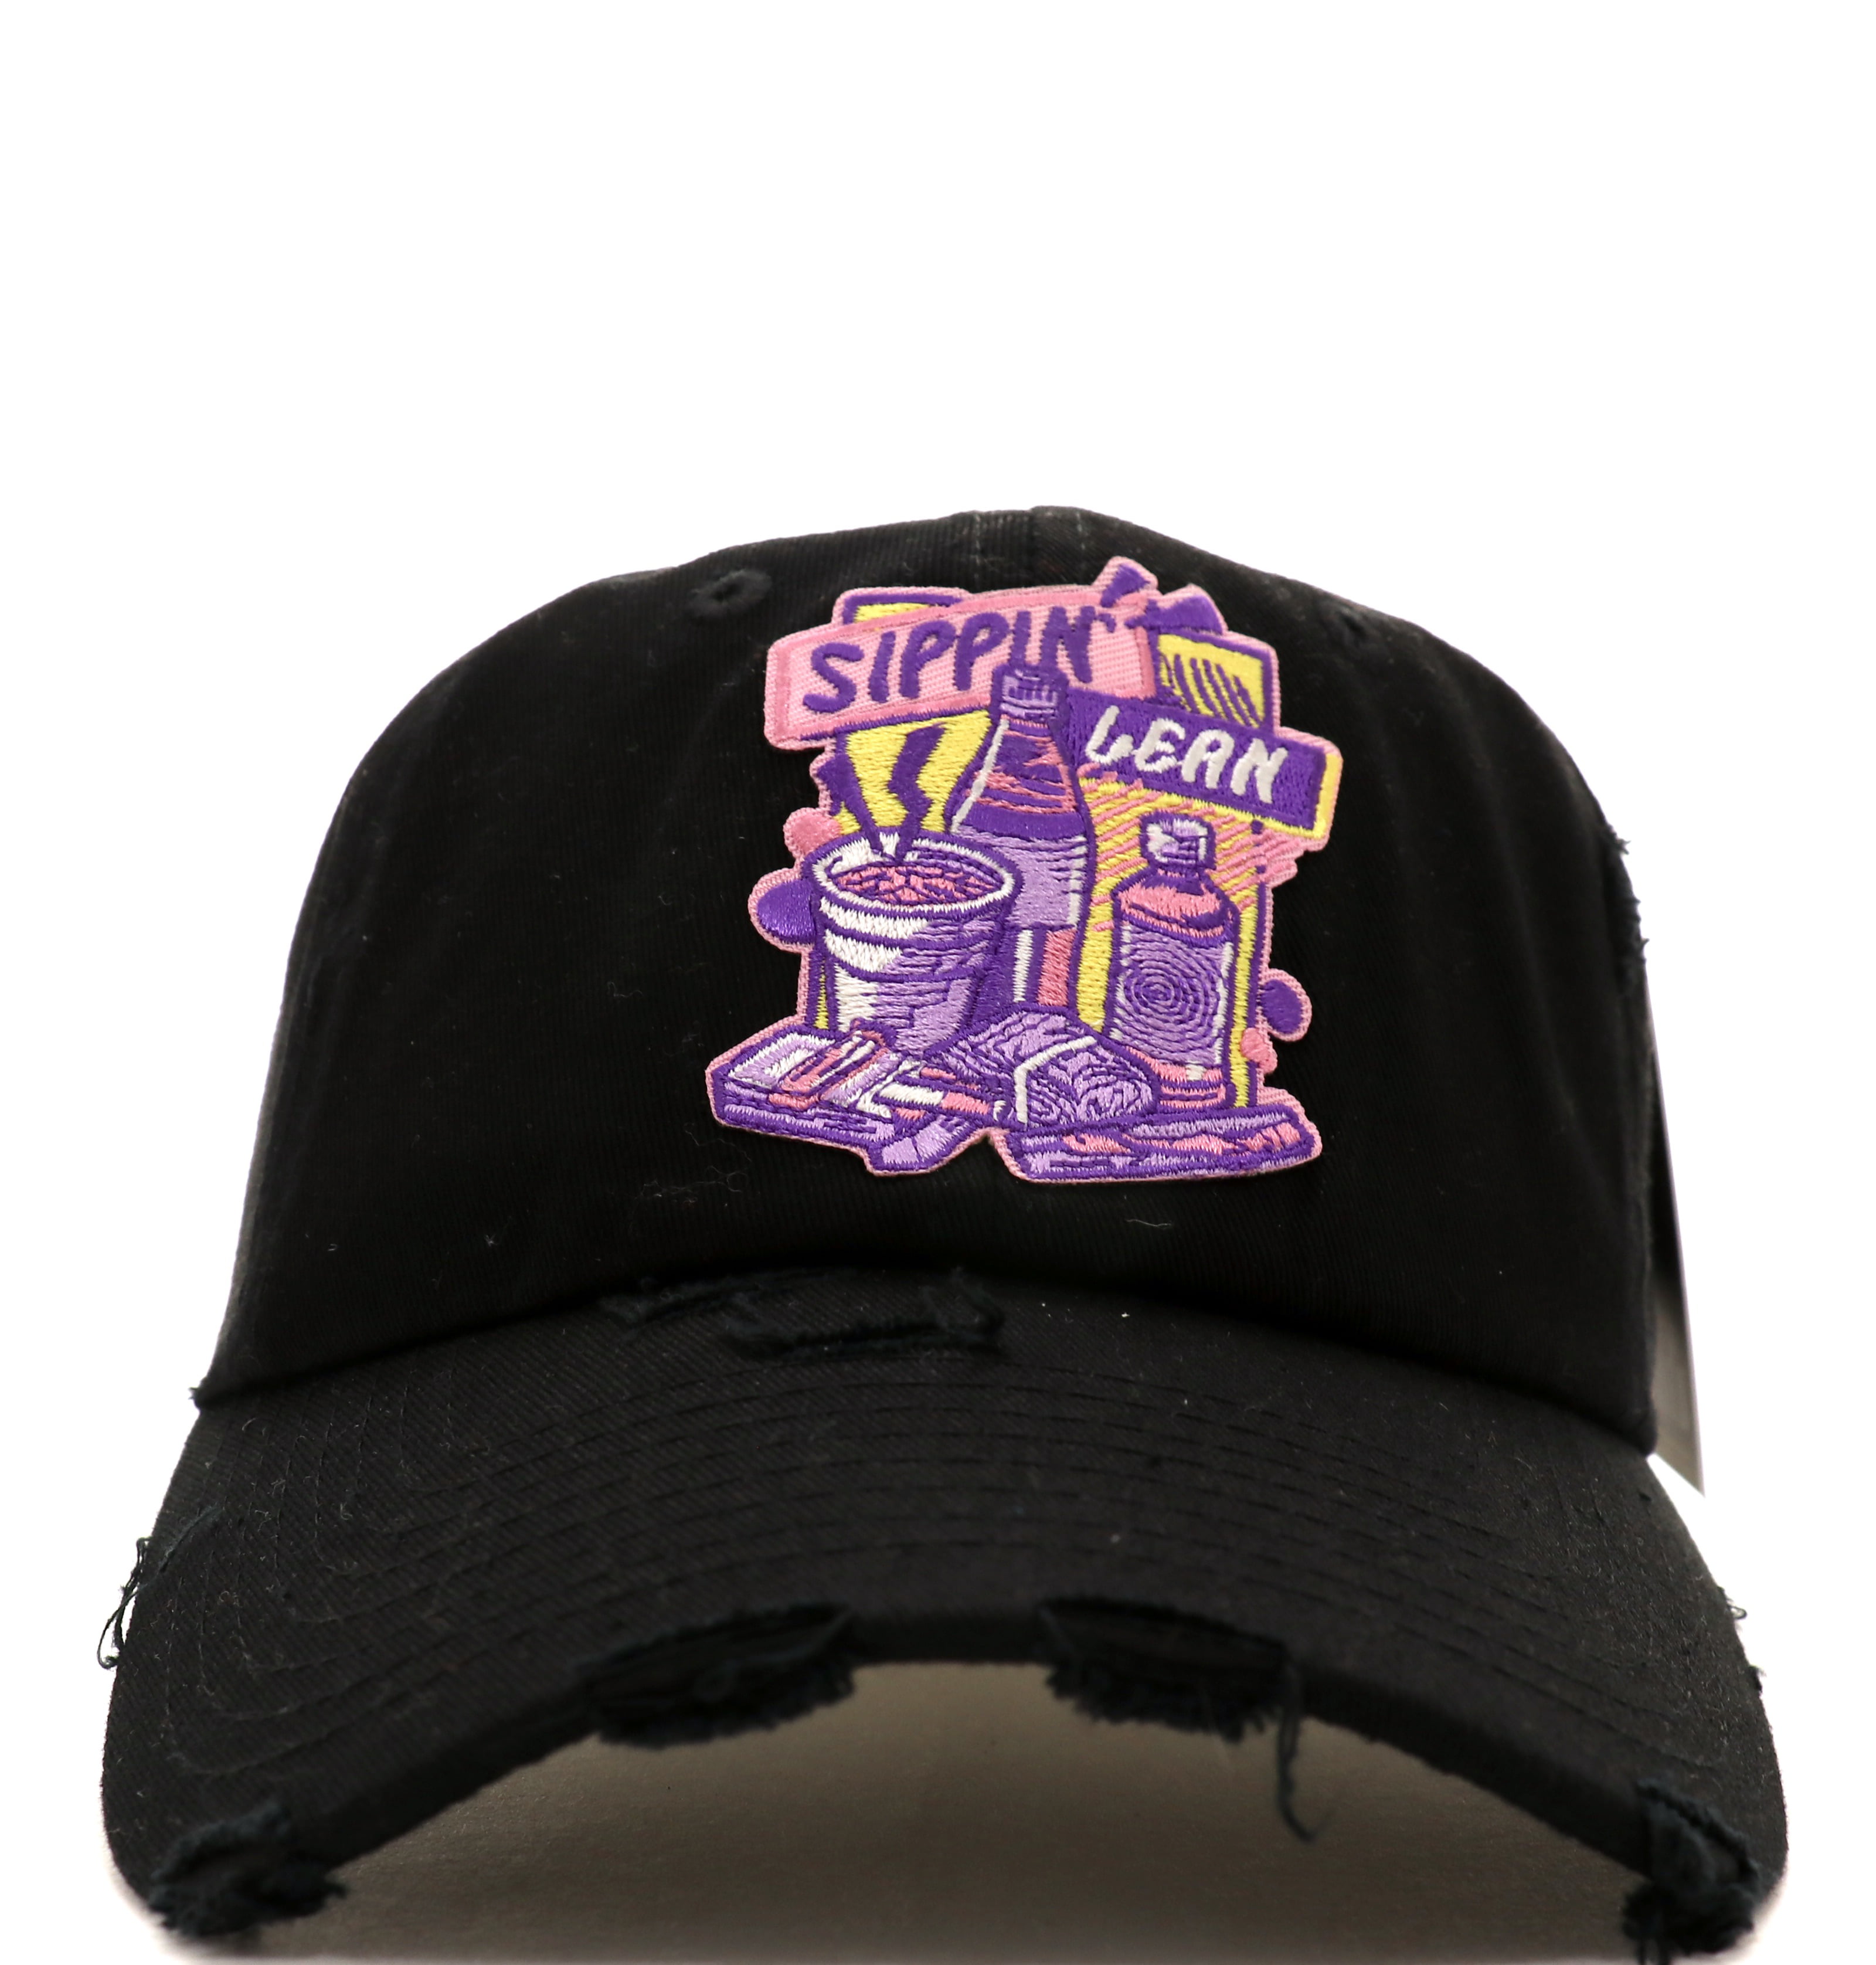 Fuck This Shit Classic Adjustable Cotton Baseball Caps Trucker Driver Hat Outdoor Cap Black